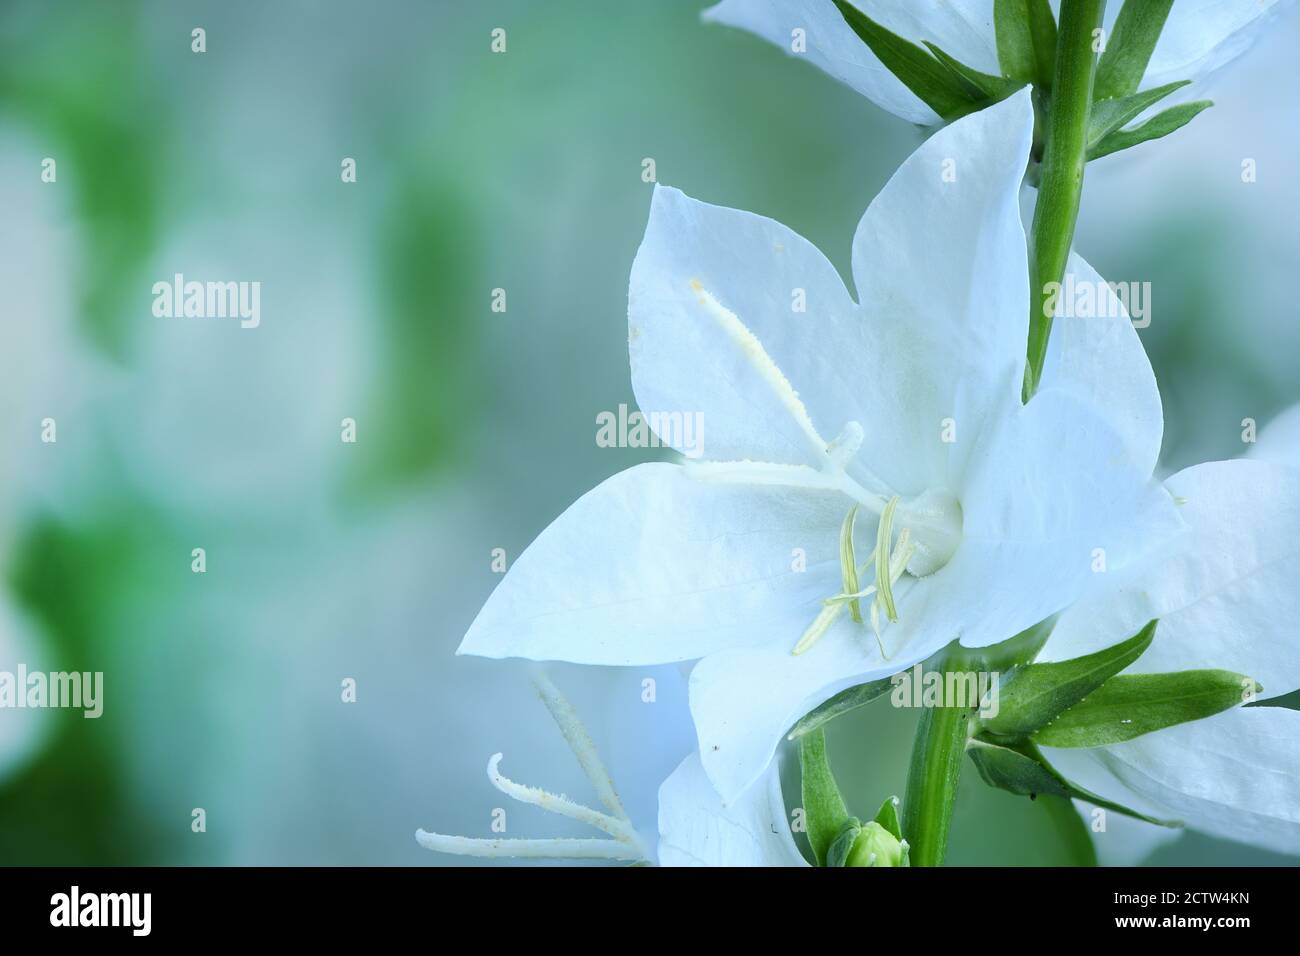 Campanula latifolia alba giant bellflower white plant. Is Latin for 'little bell'. In Russian it is called kolokolchik. In Ukrainian it is called Dzvo Stock Photo